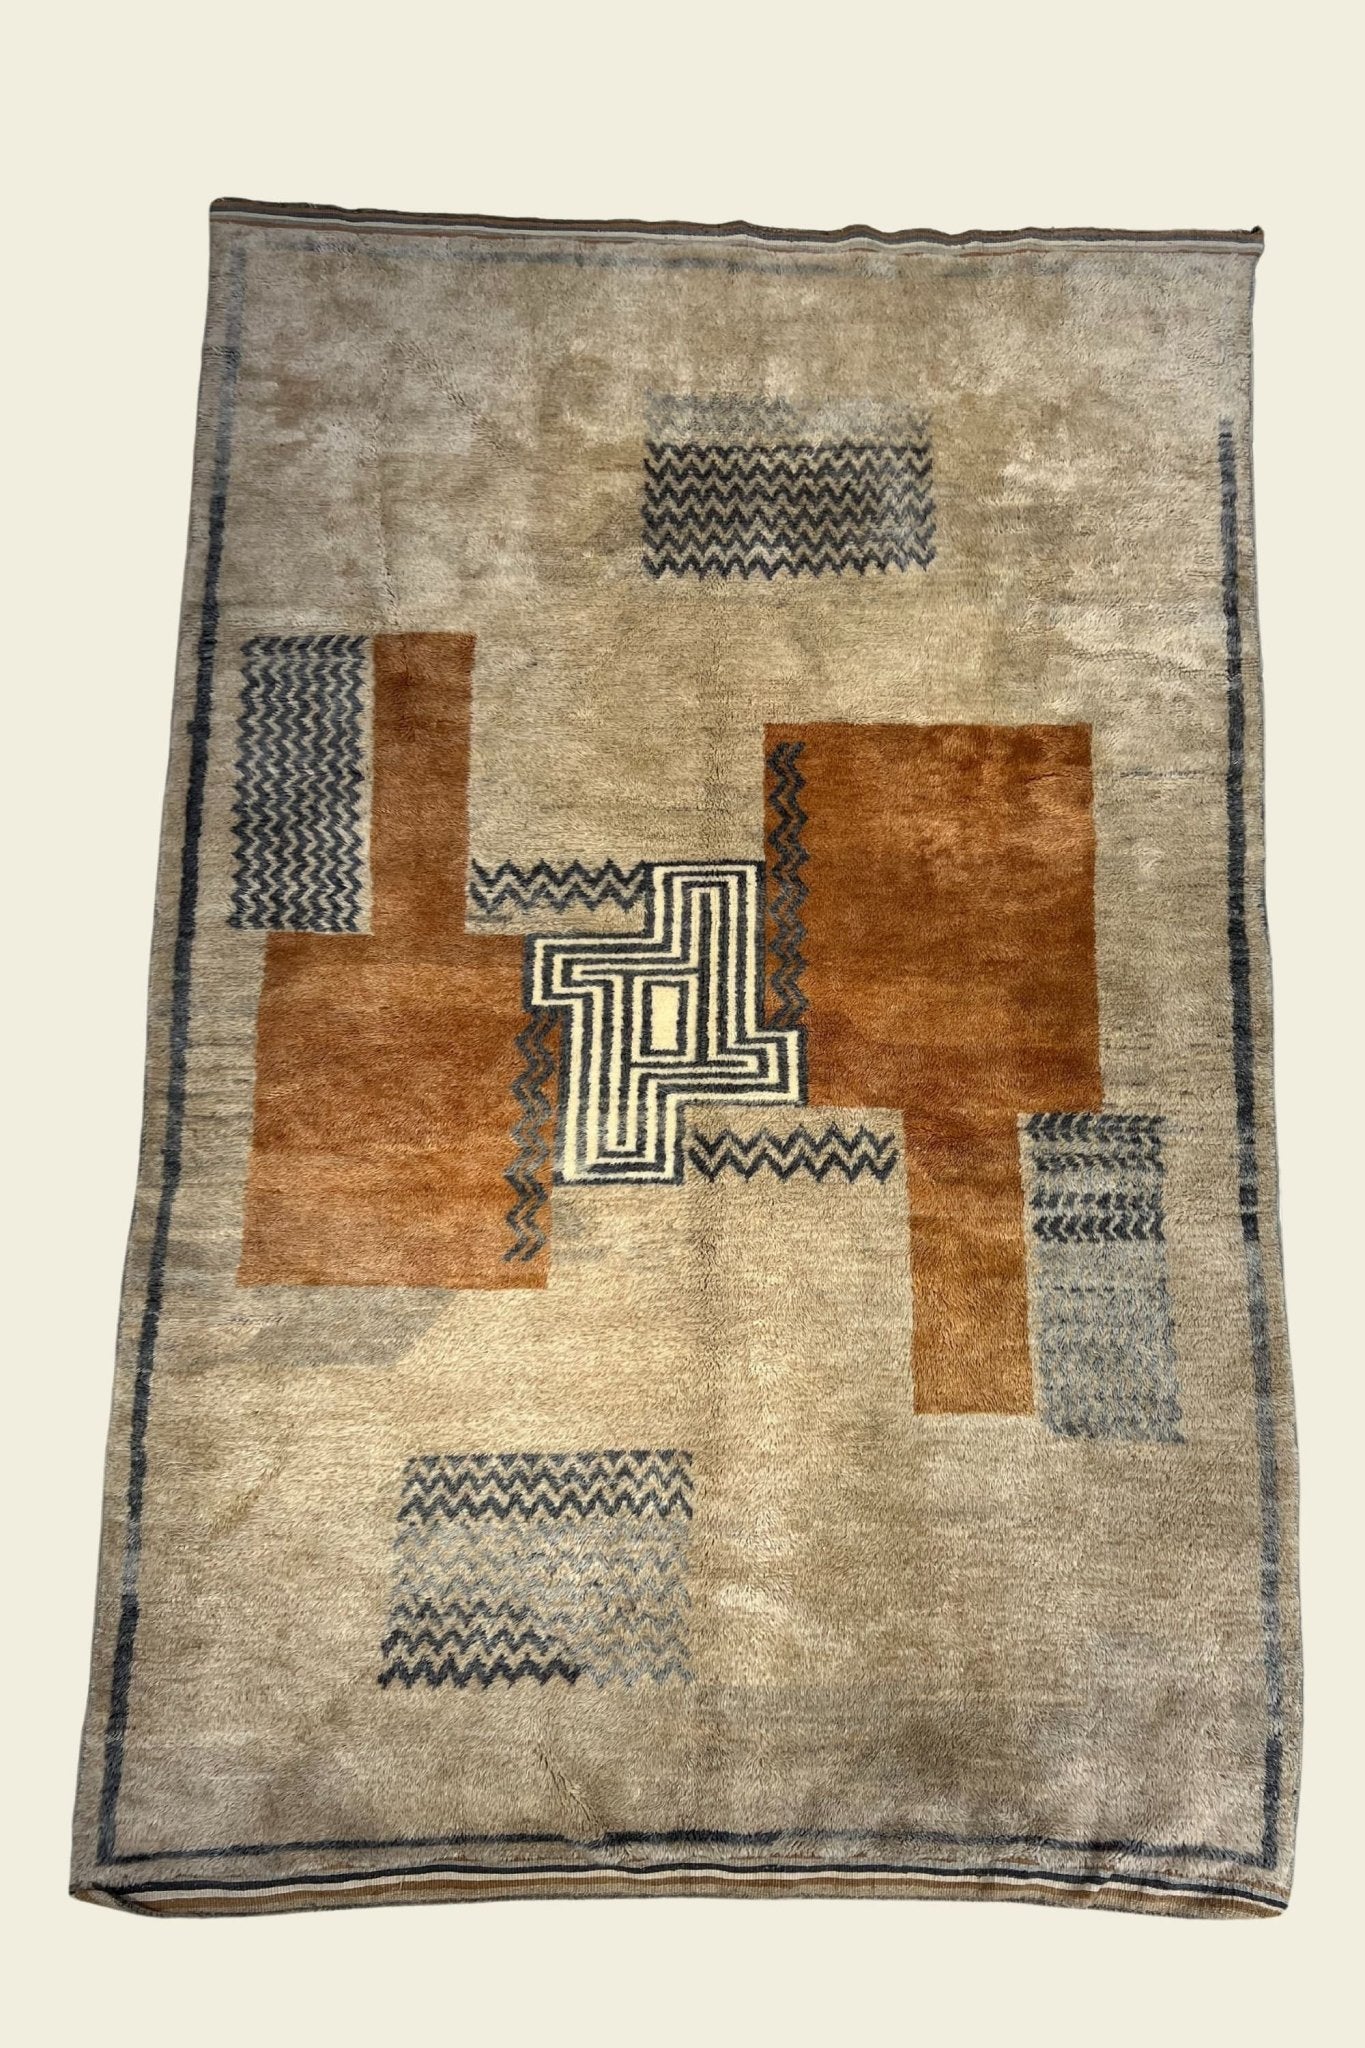 Contemporary Beni Mrirt Berber Rug 6'85" x 10'49" - 209 cm x 320 cm (Wool) - Dar Bouchaib Marrakech